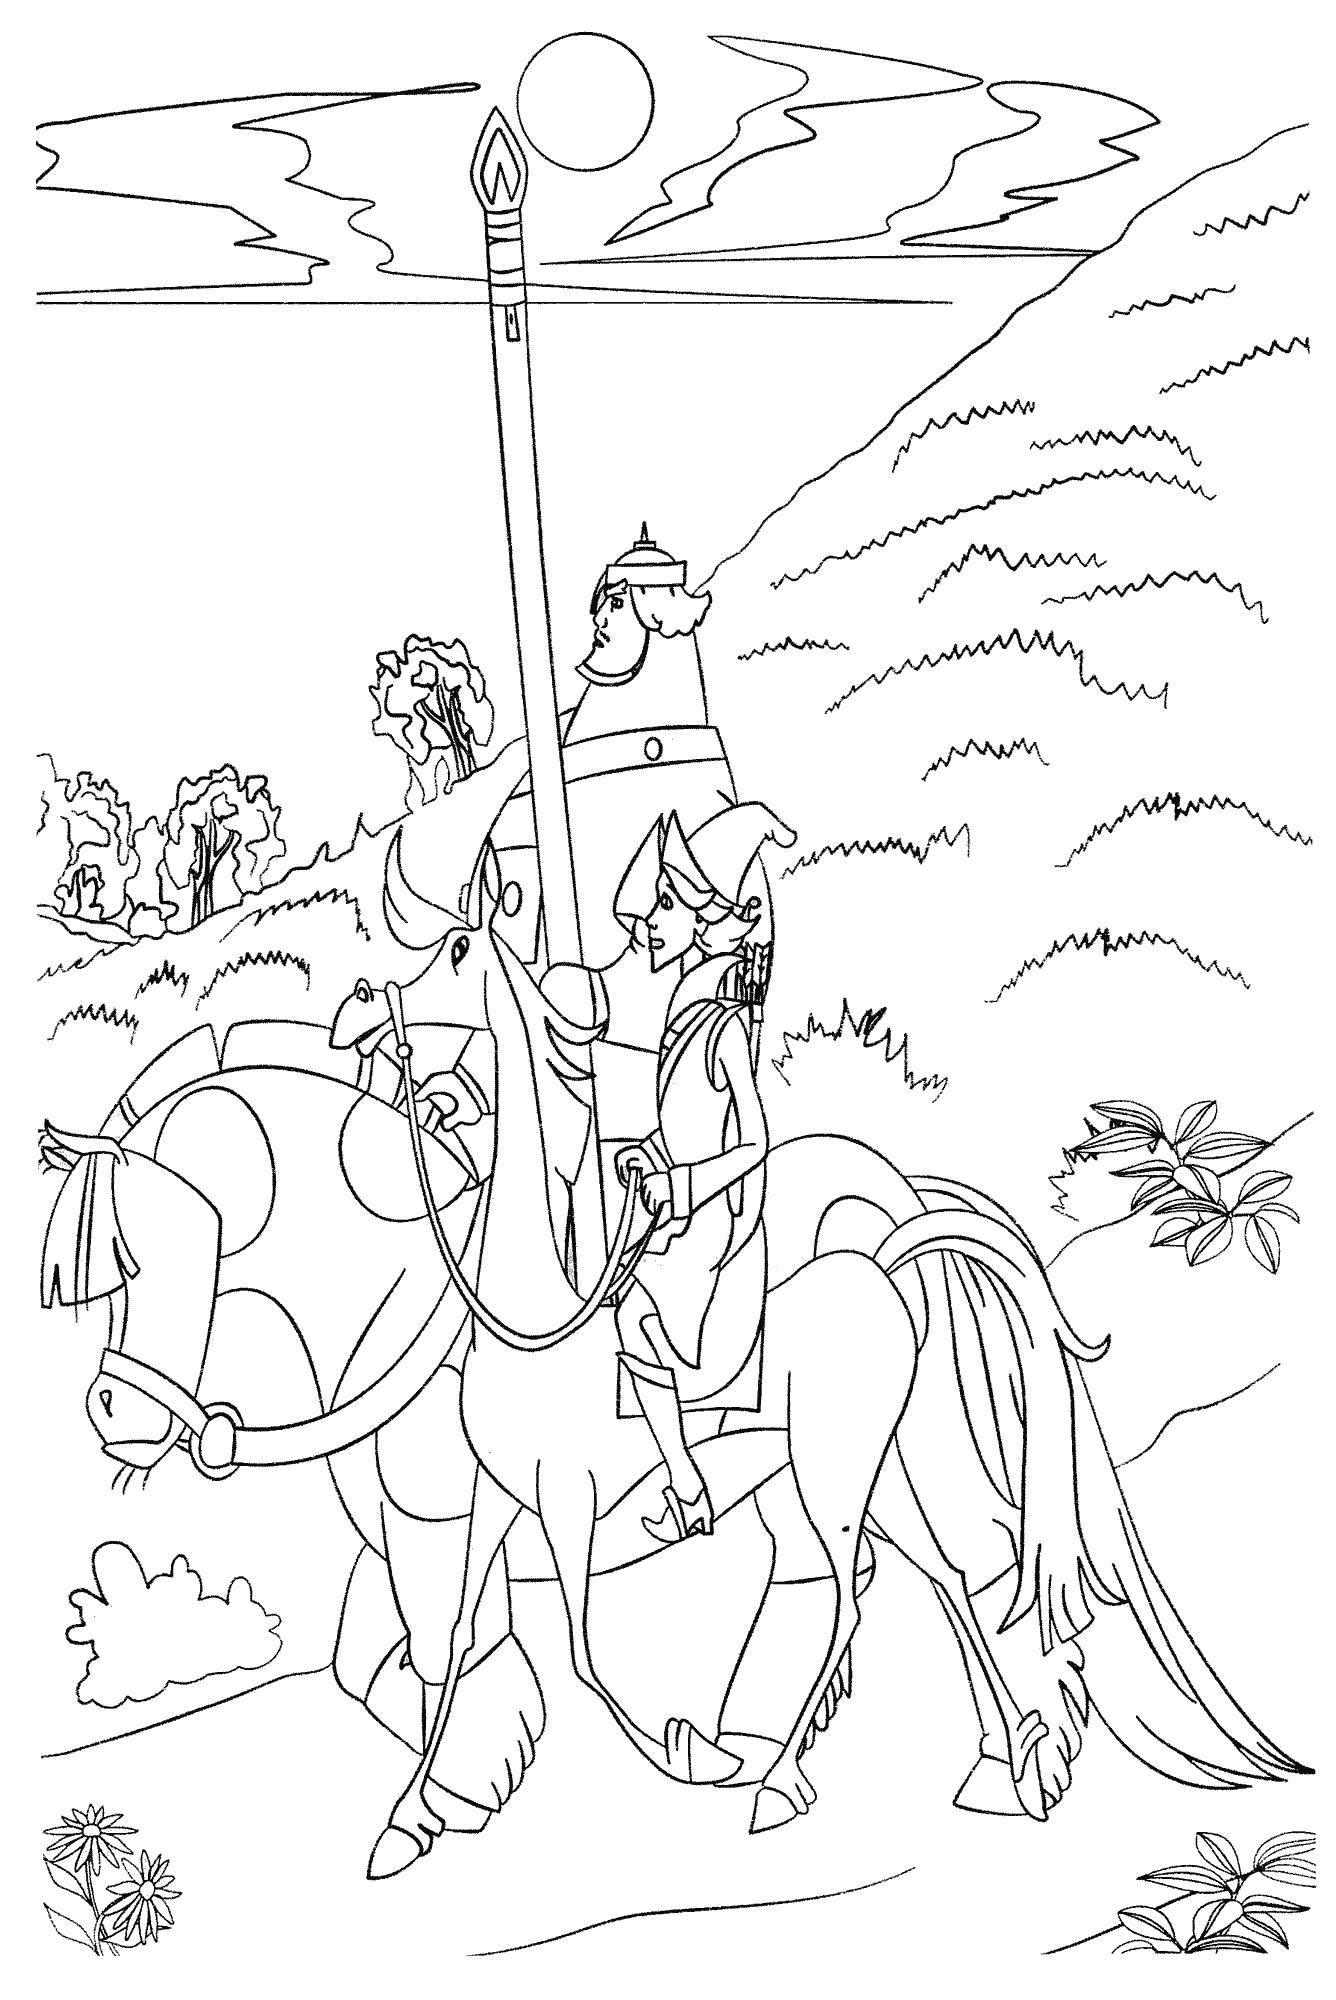 Coloring Ilya Muromets on horseback. Category Cartoon character. Tags:  Ilya Muromets, Bogatyr.